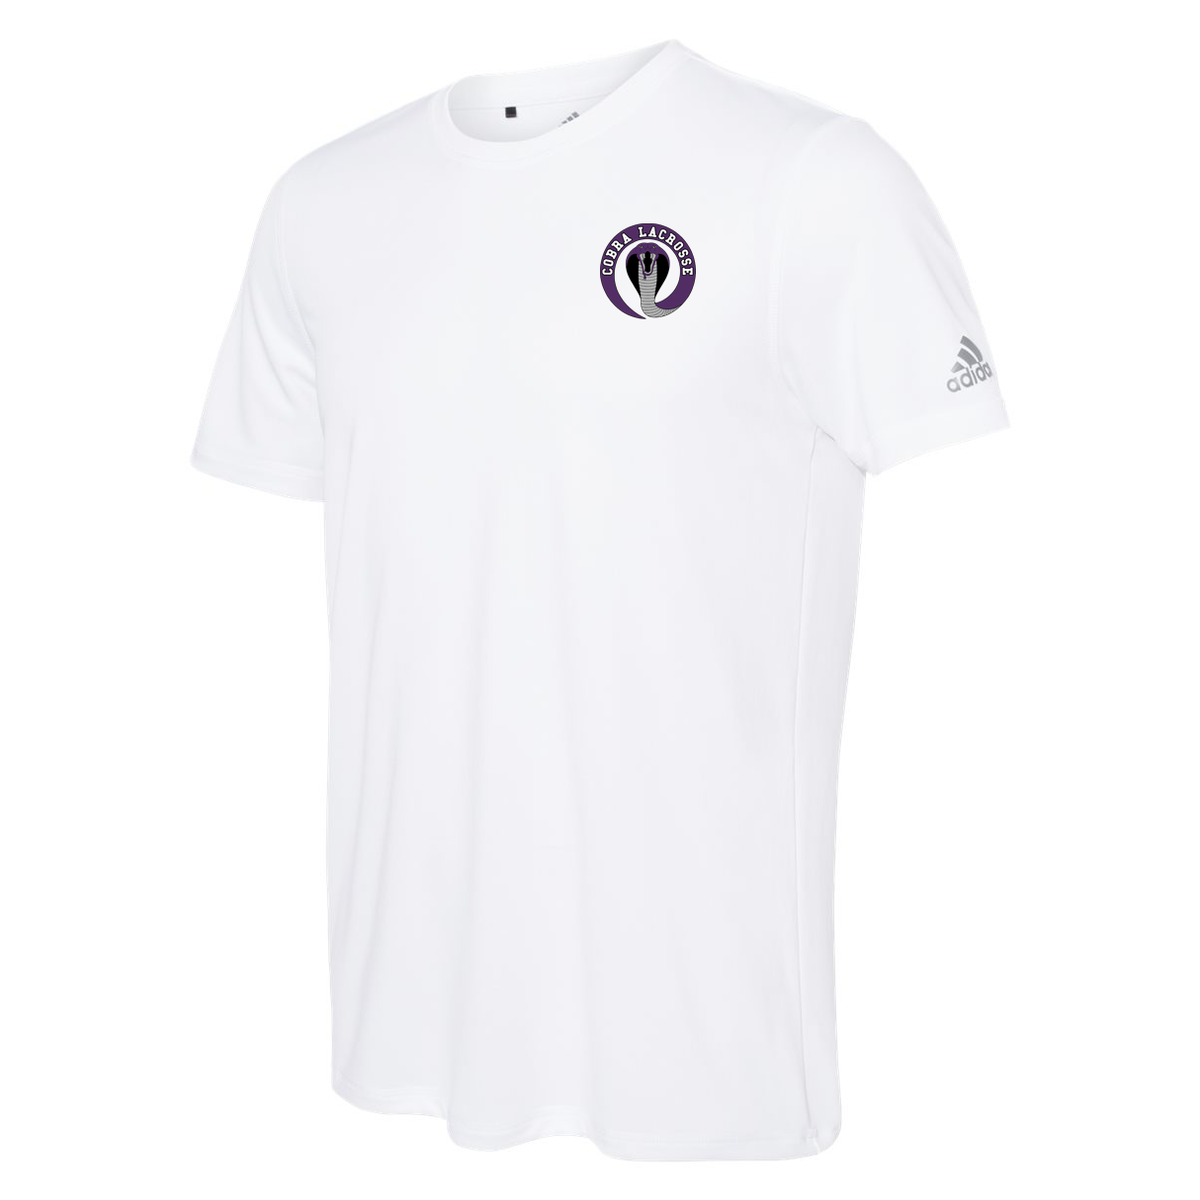 Cobra Lacrosse Adidas Sport T-Shirt